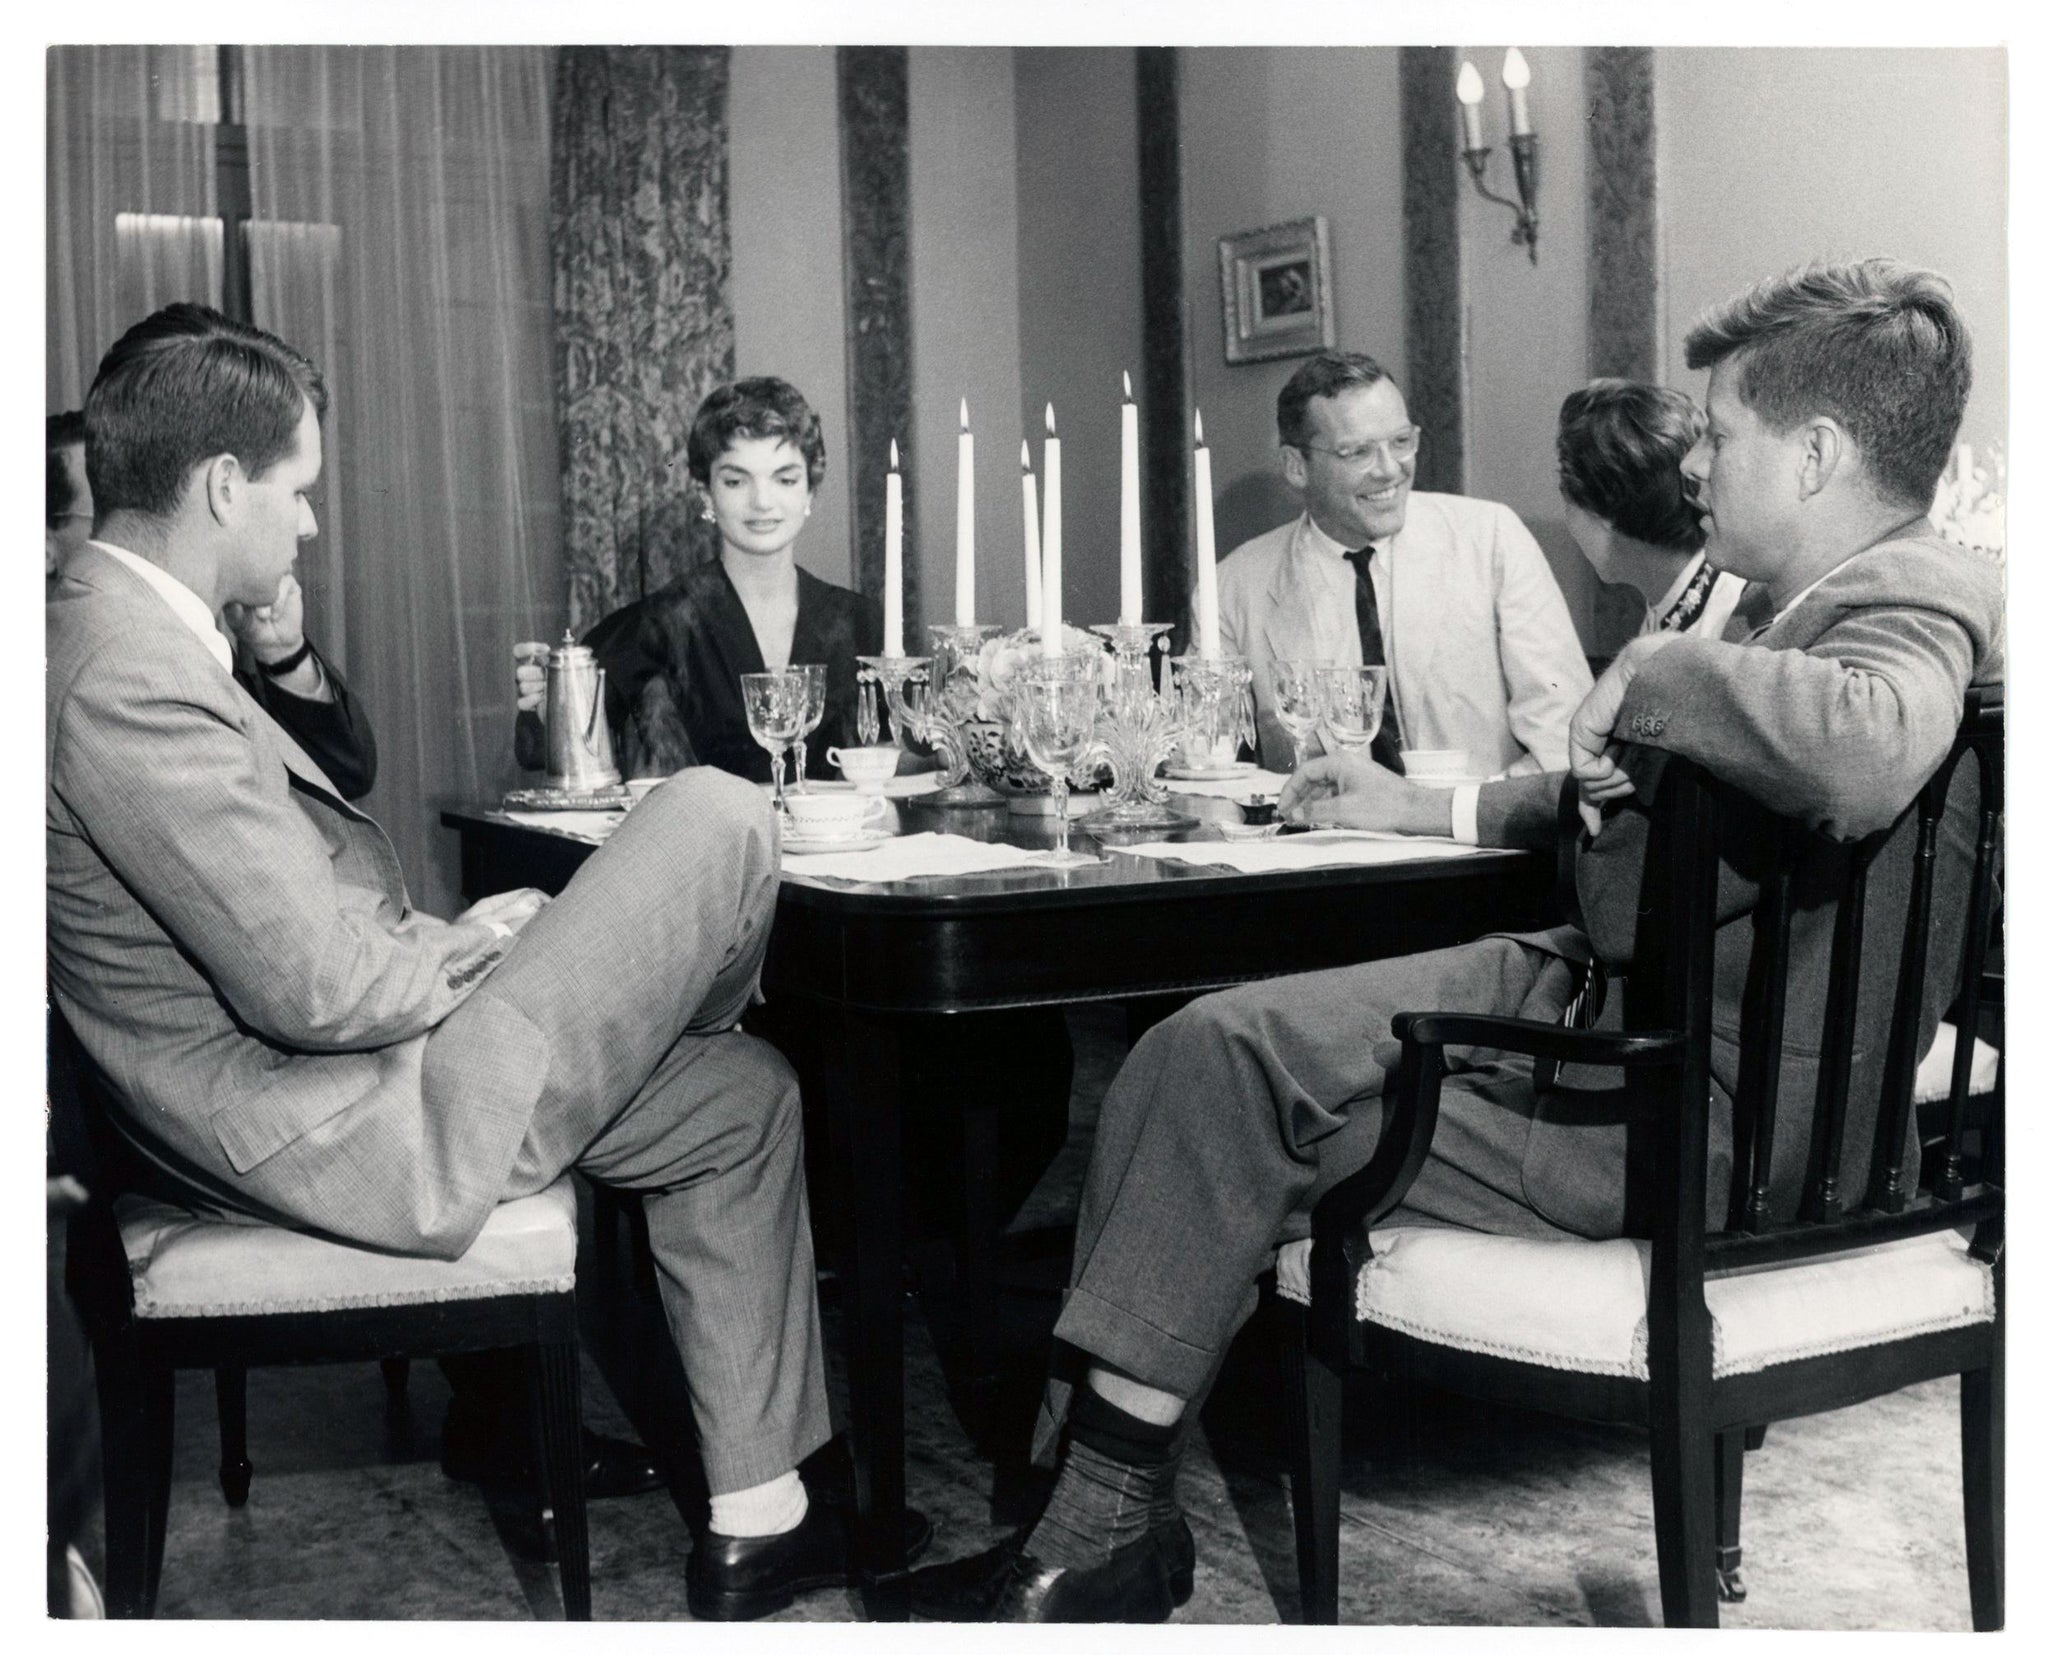 KENNEDY FAMILY: JOHN F. KENNEDY (JFK), JACKIE, ROBERT - VINTAGE PRESS PHOTOGRAPH